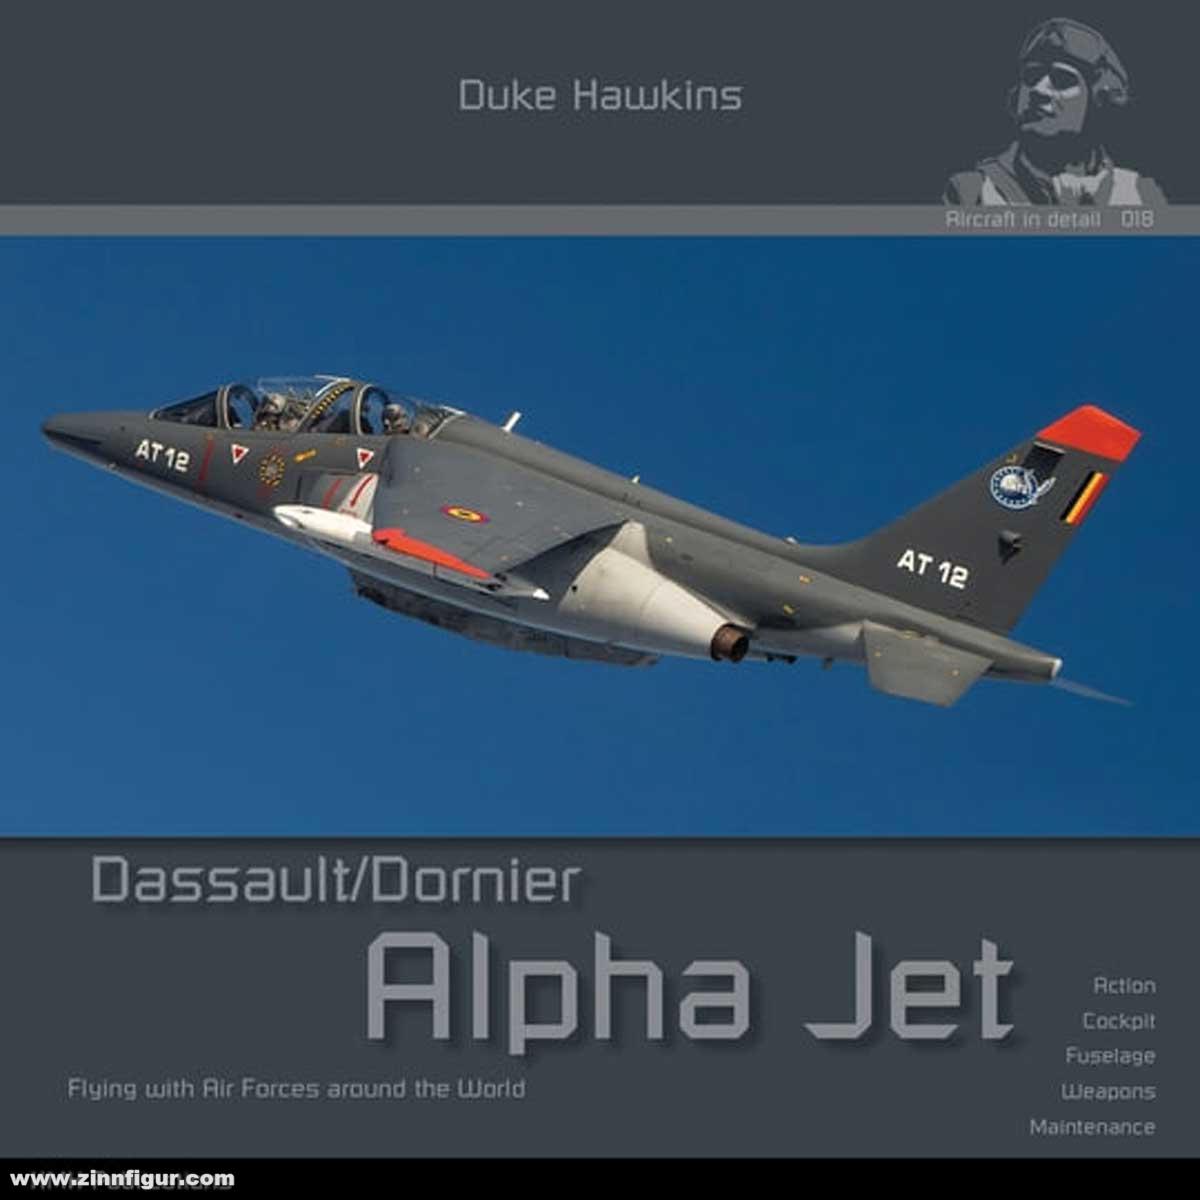 HMH Historical Hawkins, Duke: Dassault/Dornier Alpha Jet. Flying with Air Forces around the world